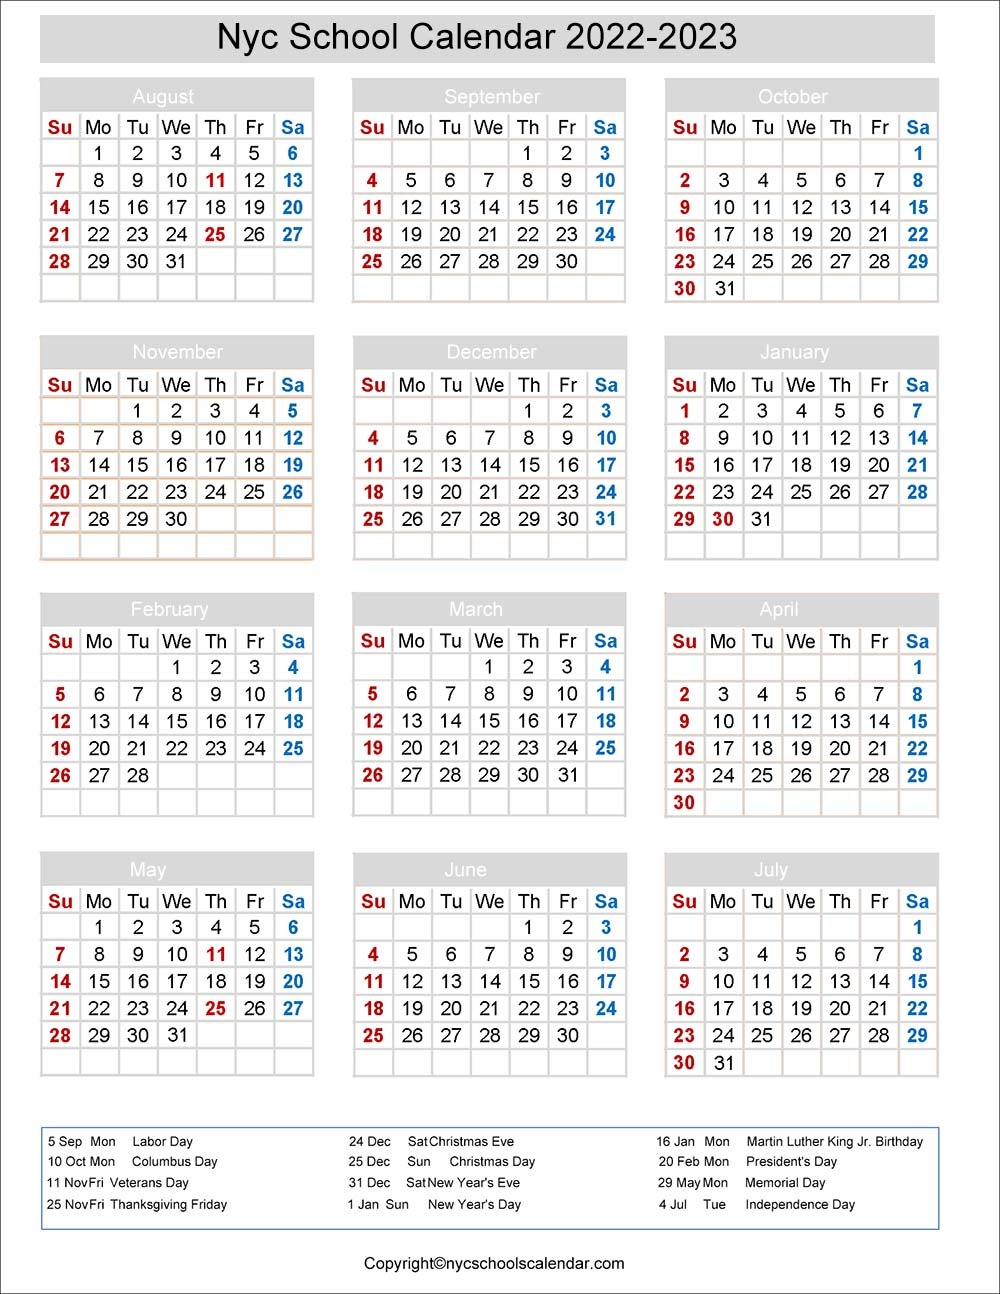 Get May 2022 Election Calendar